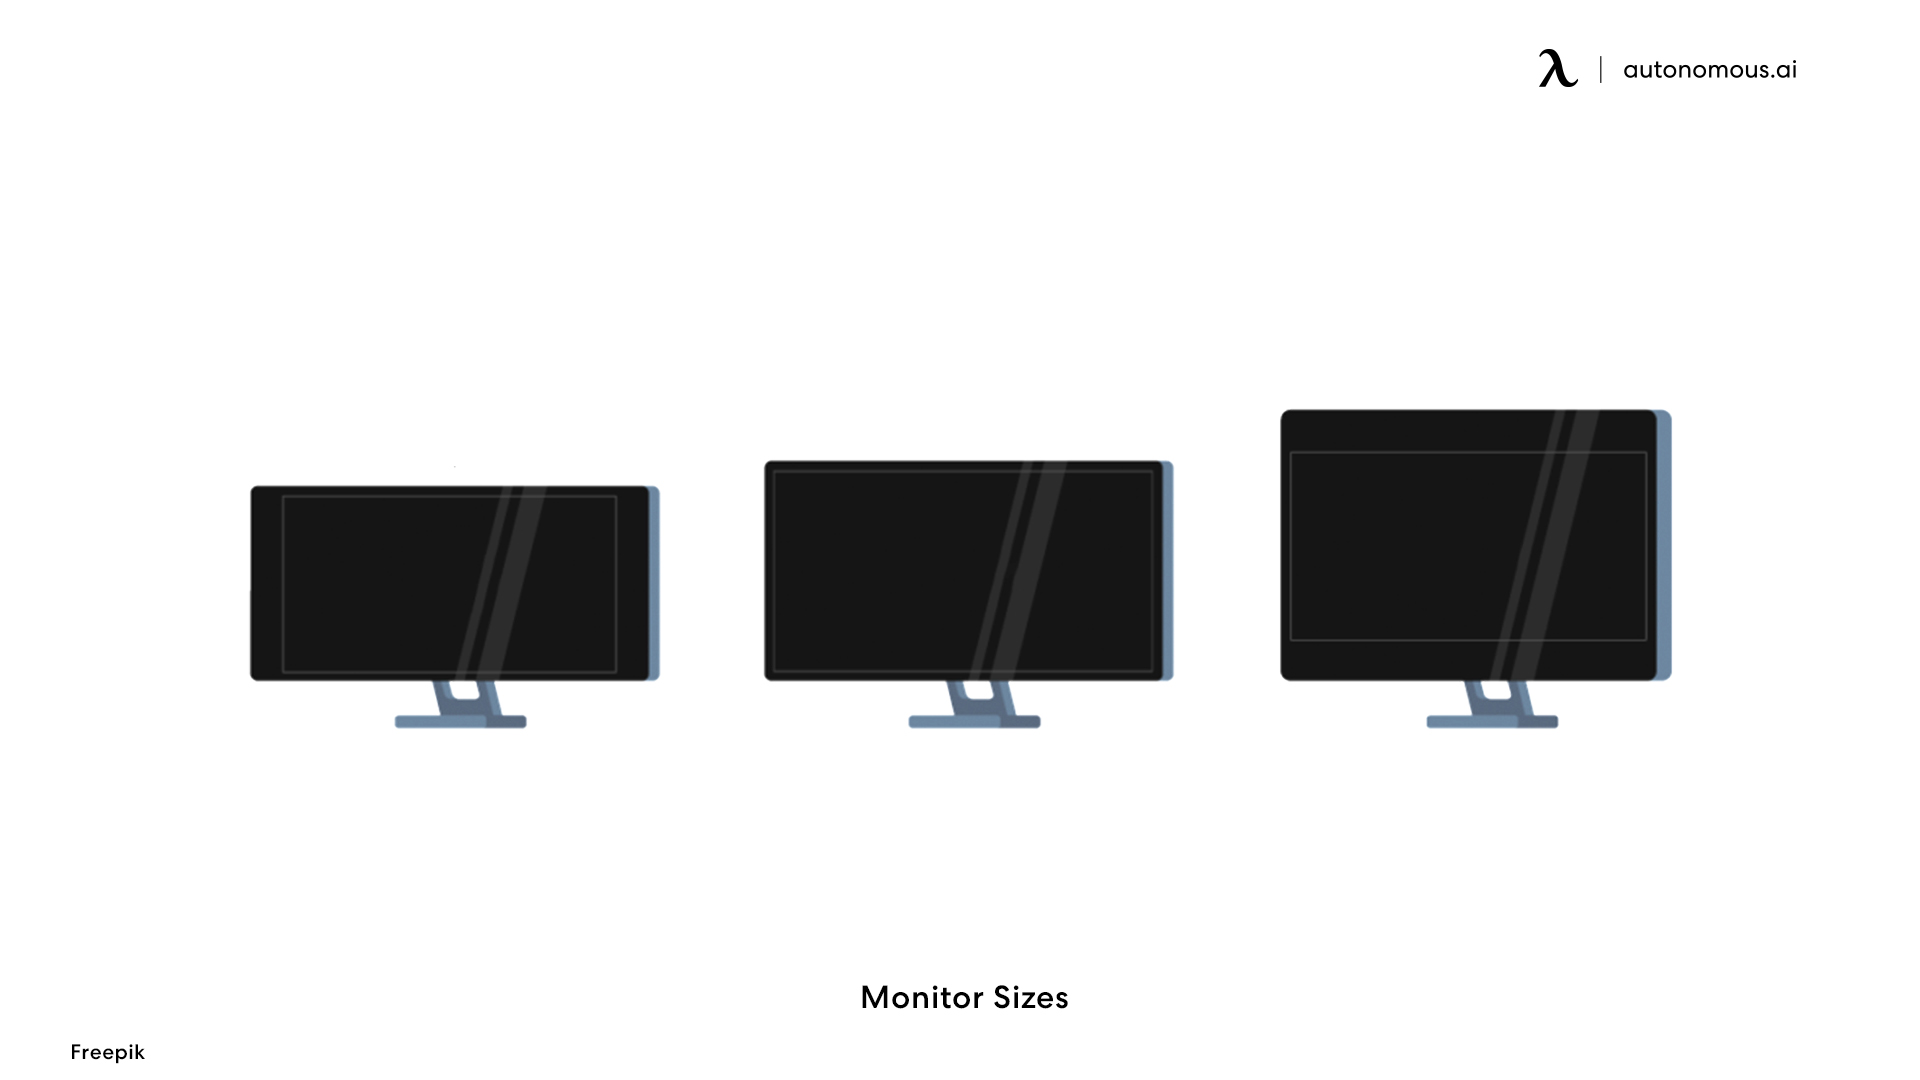 Size triple monitor mount setup